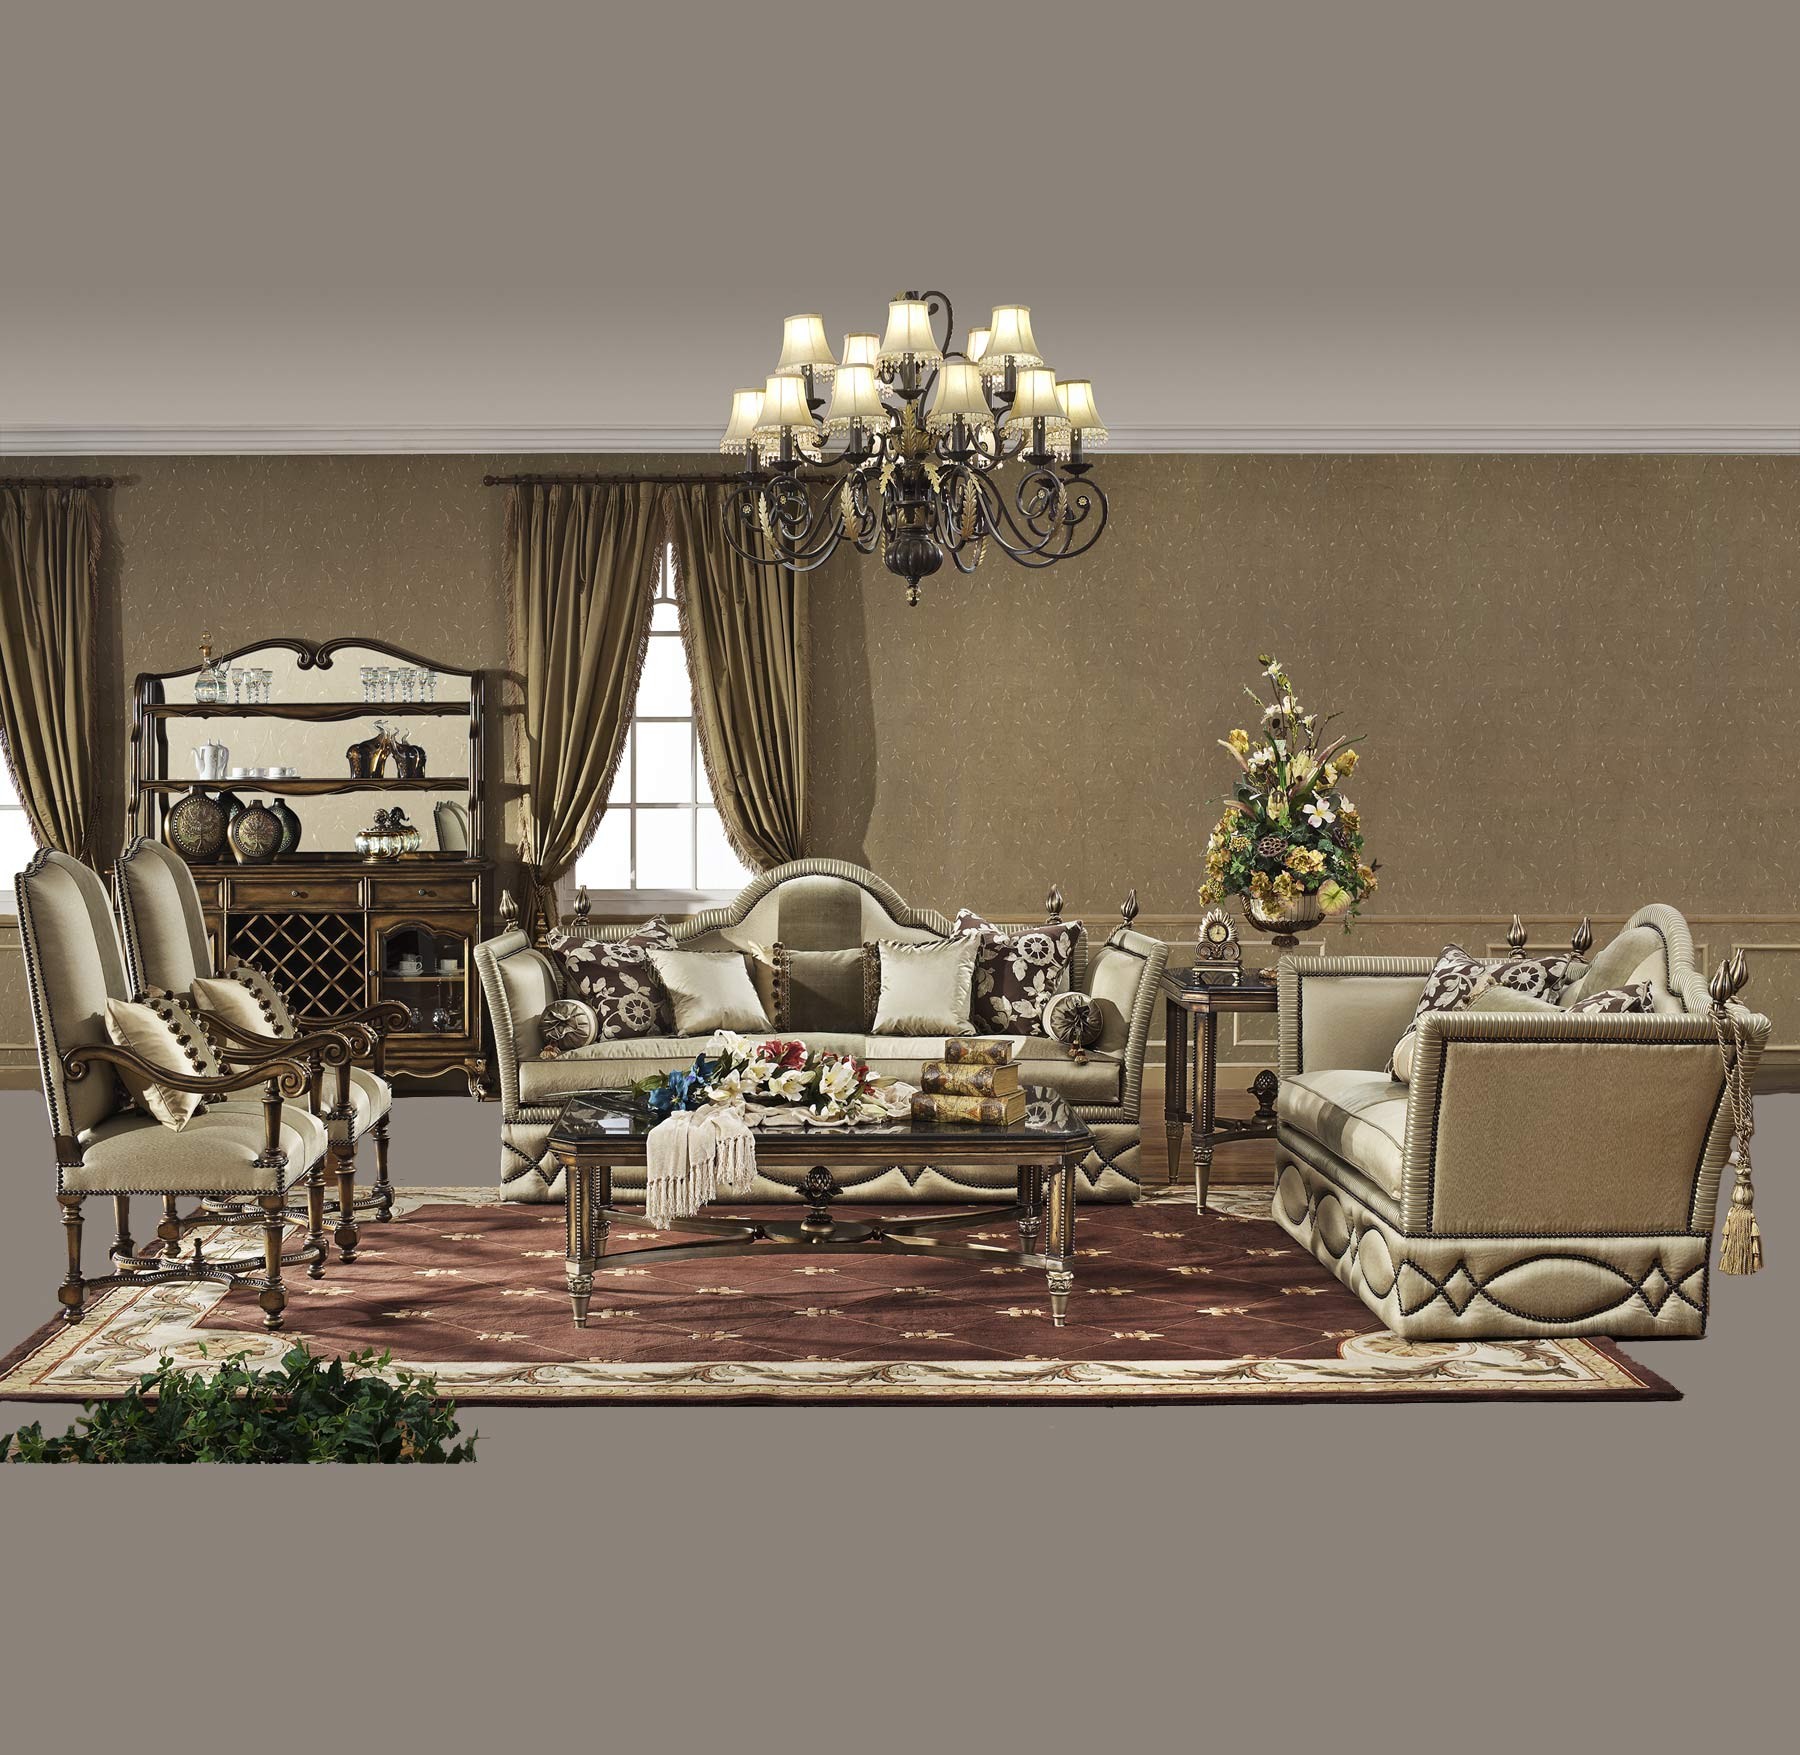 Wellesley 6-pc Living Room Set shown in Parisian Bronze finish